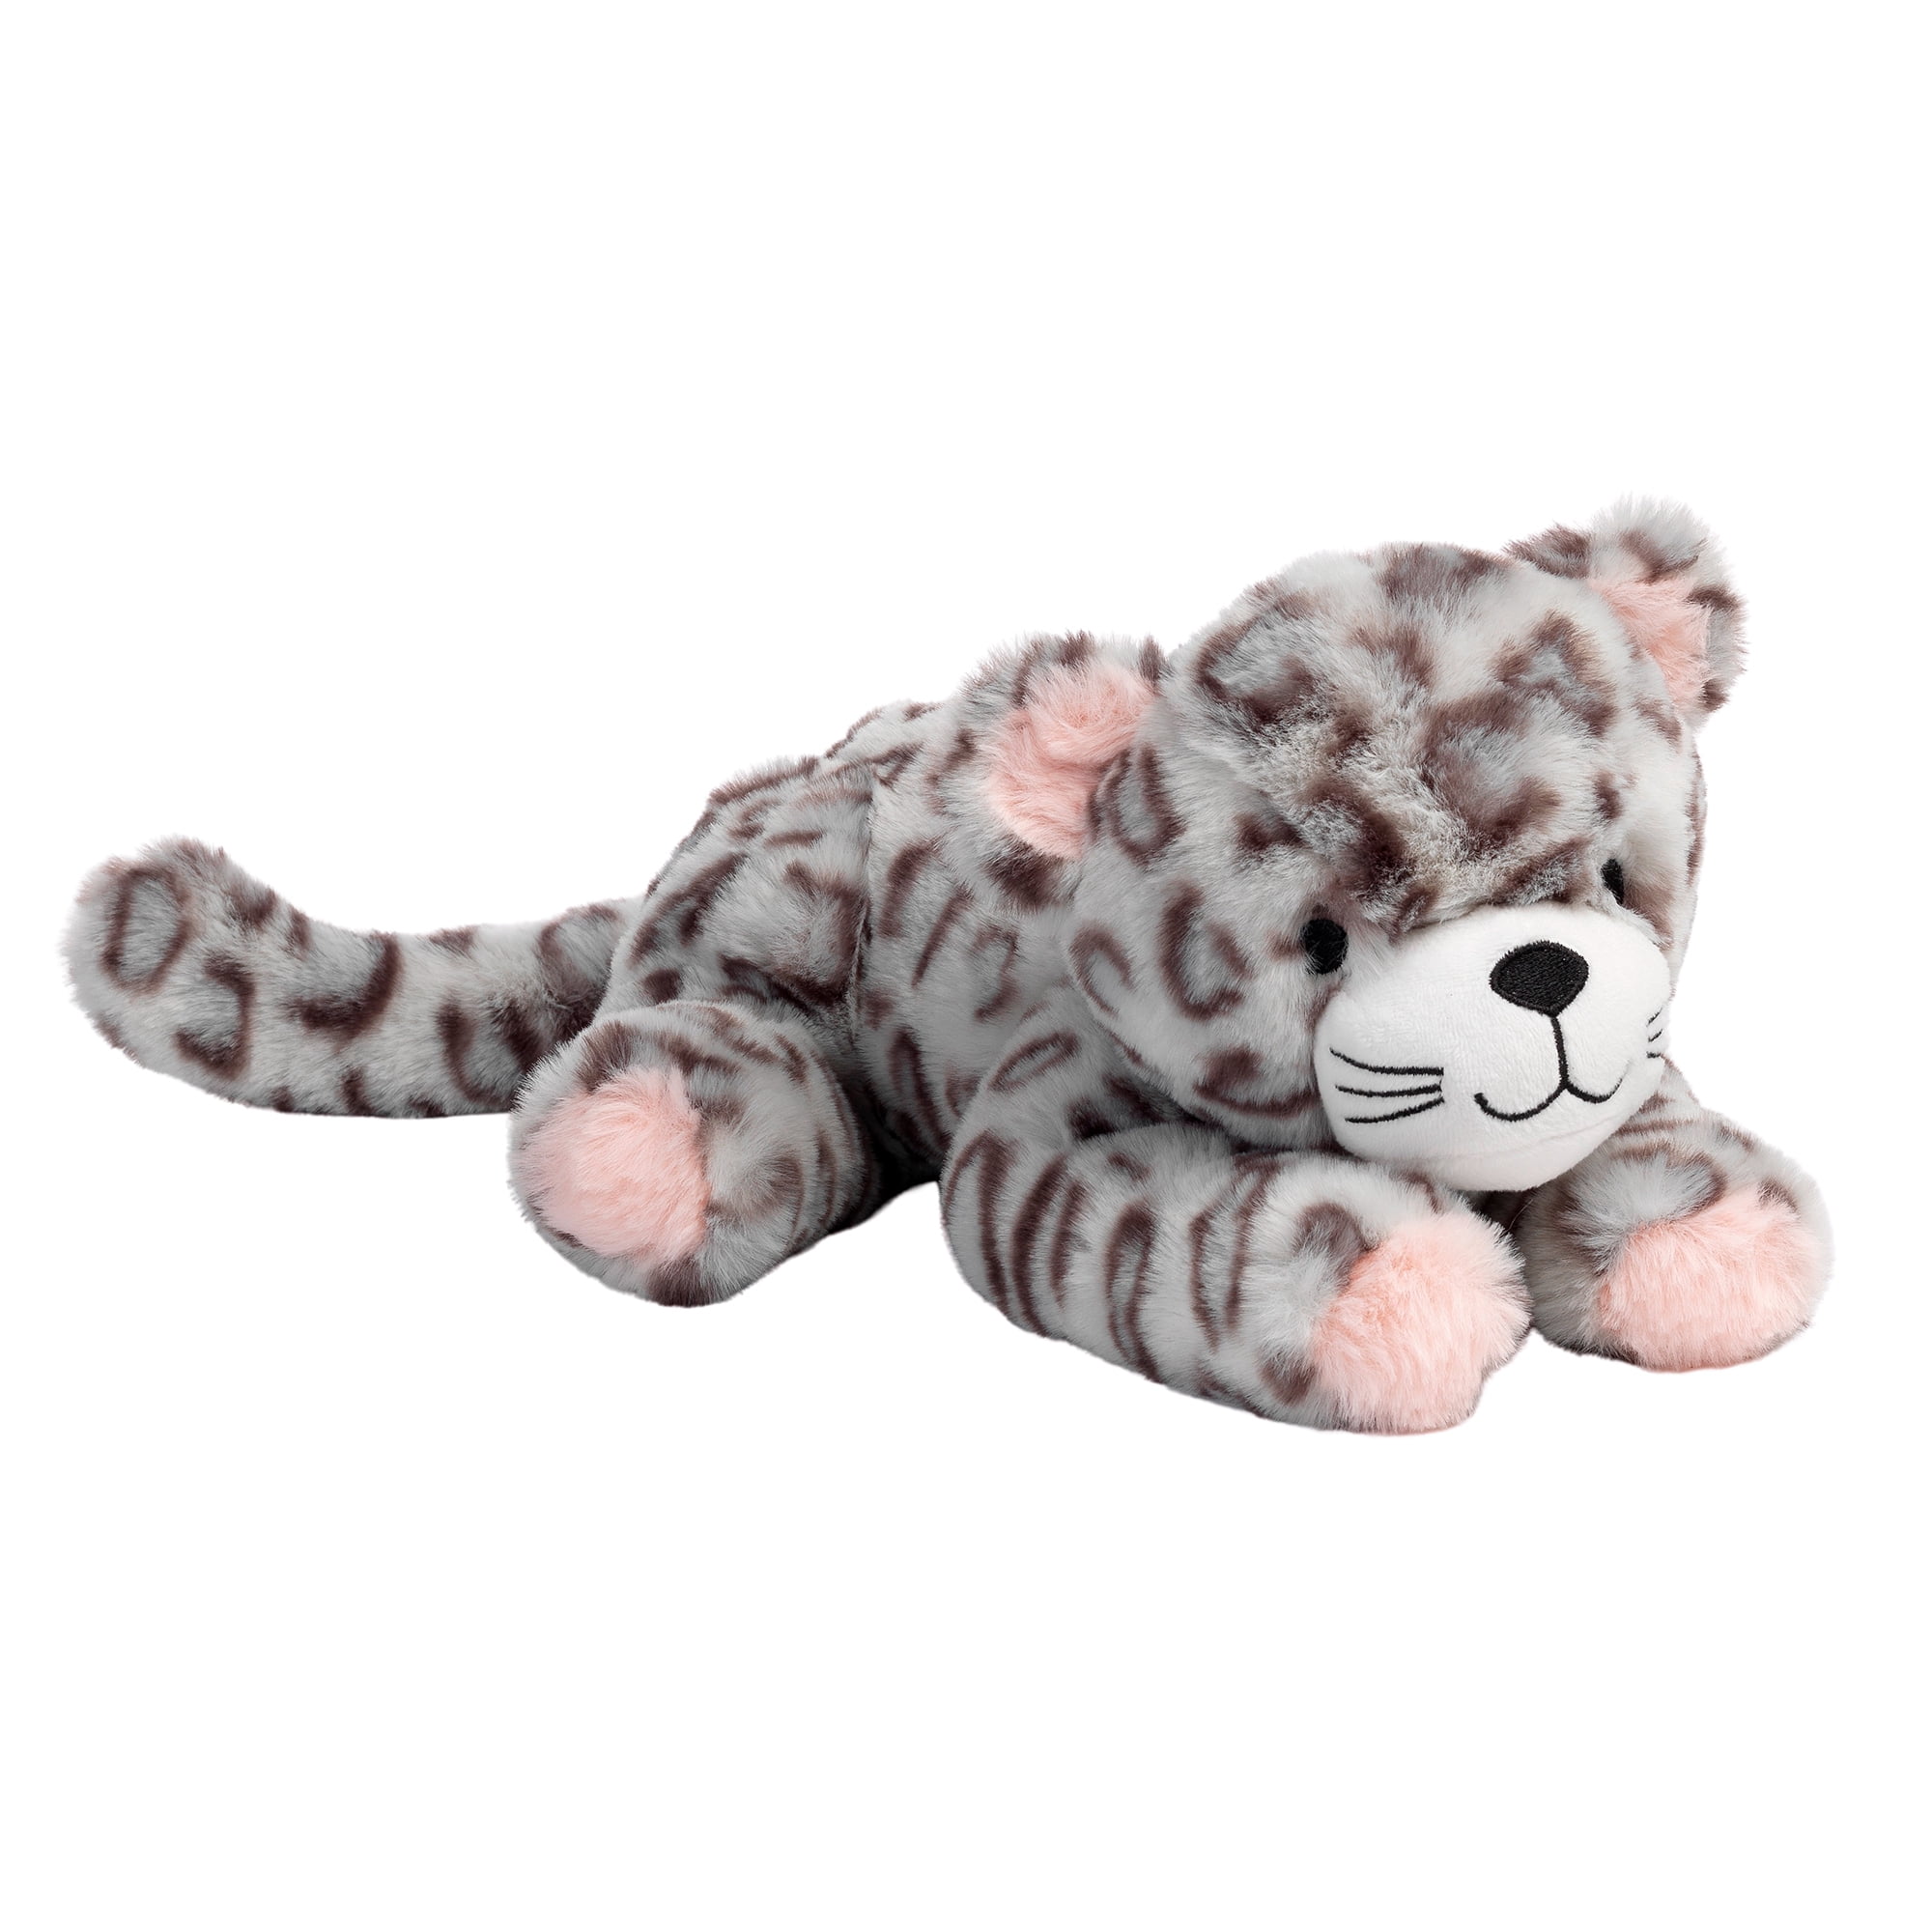 Walmart Leopard Brown White Black Plush Soft Toy Stuffed Animal 10" for sale online 